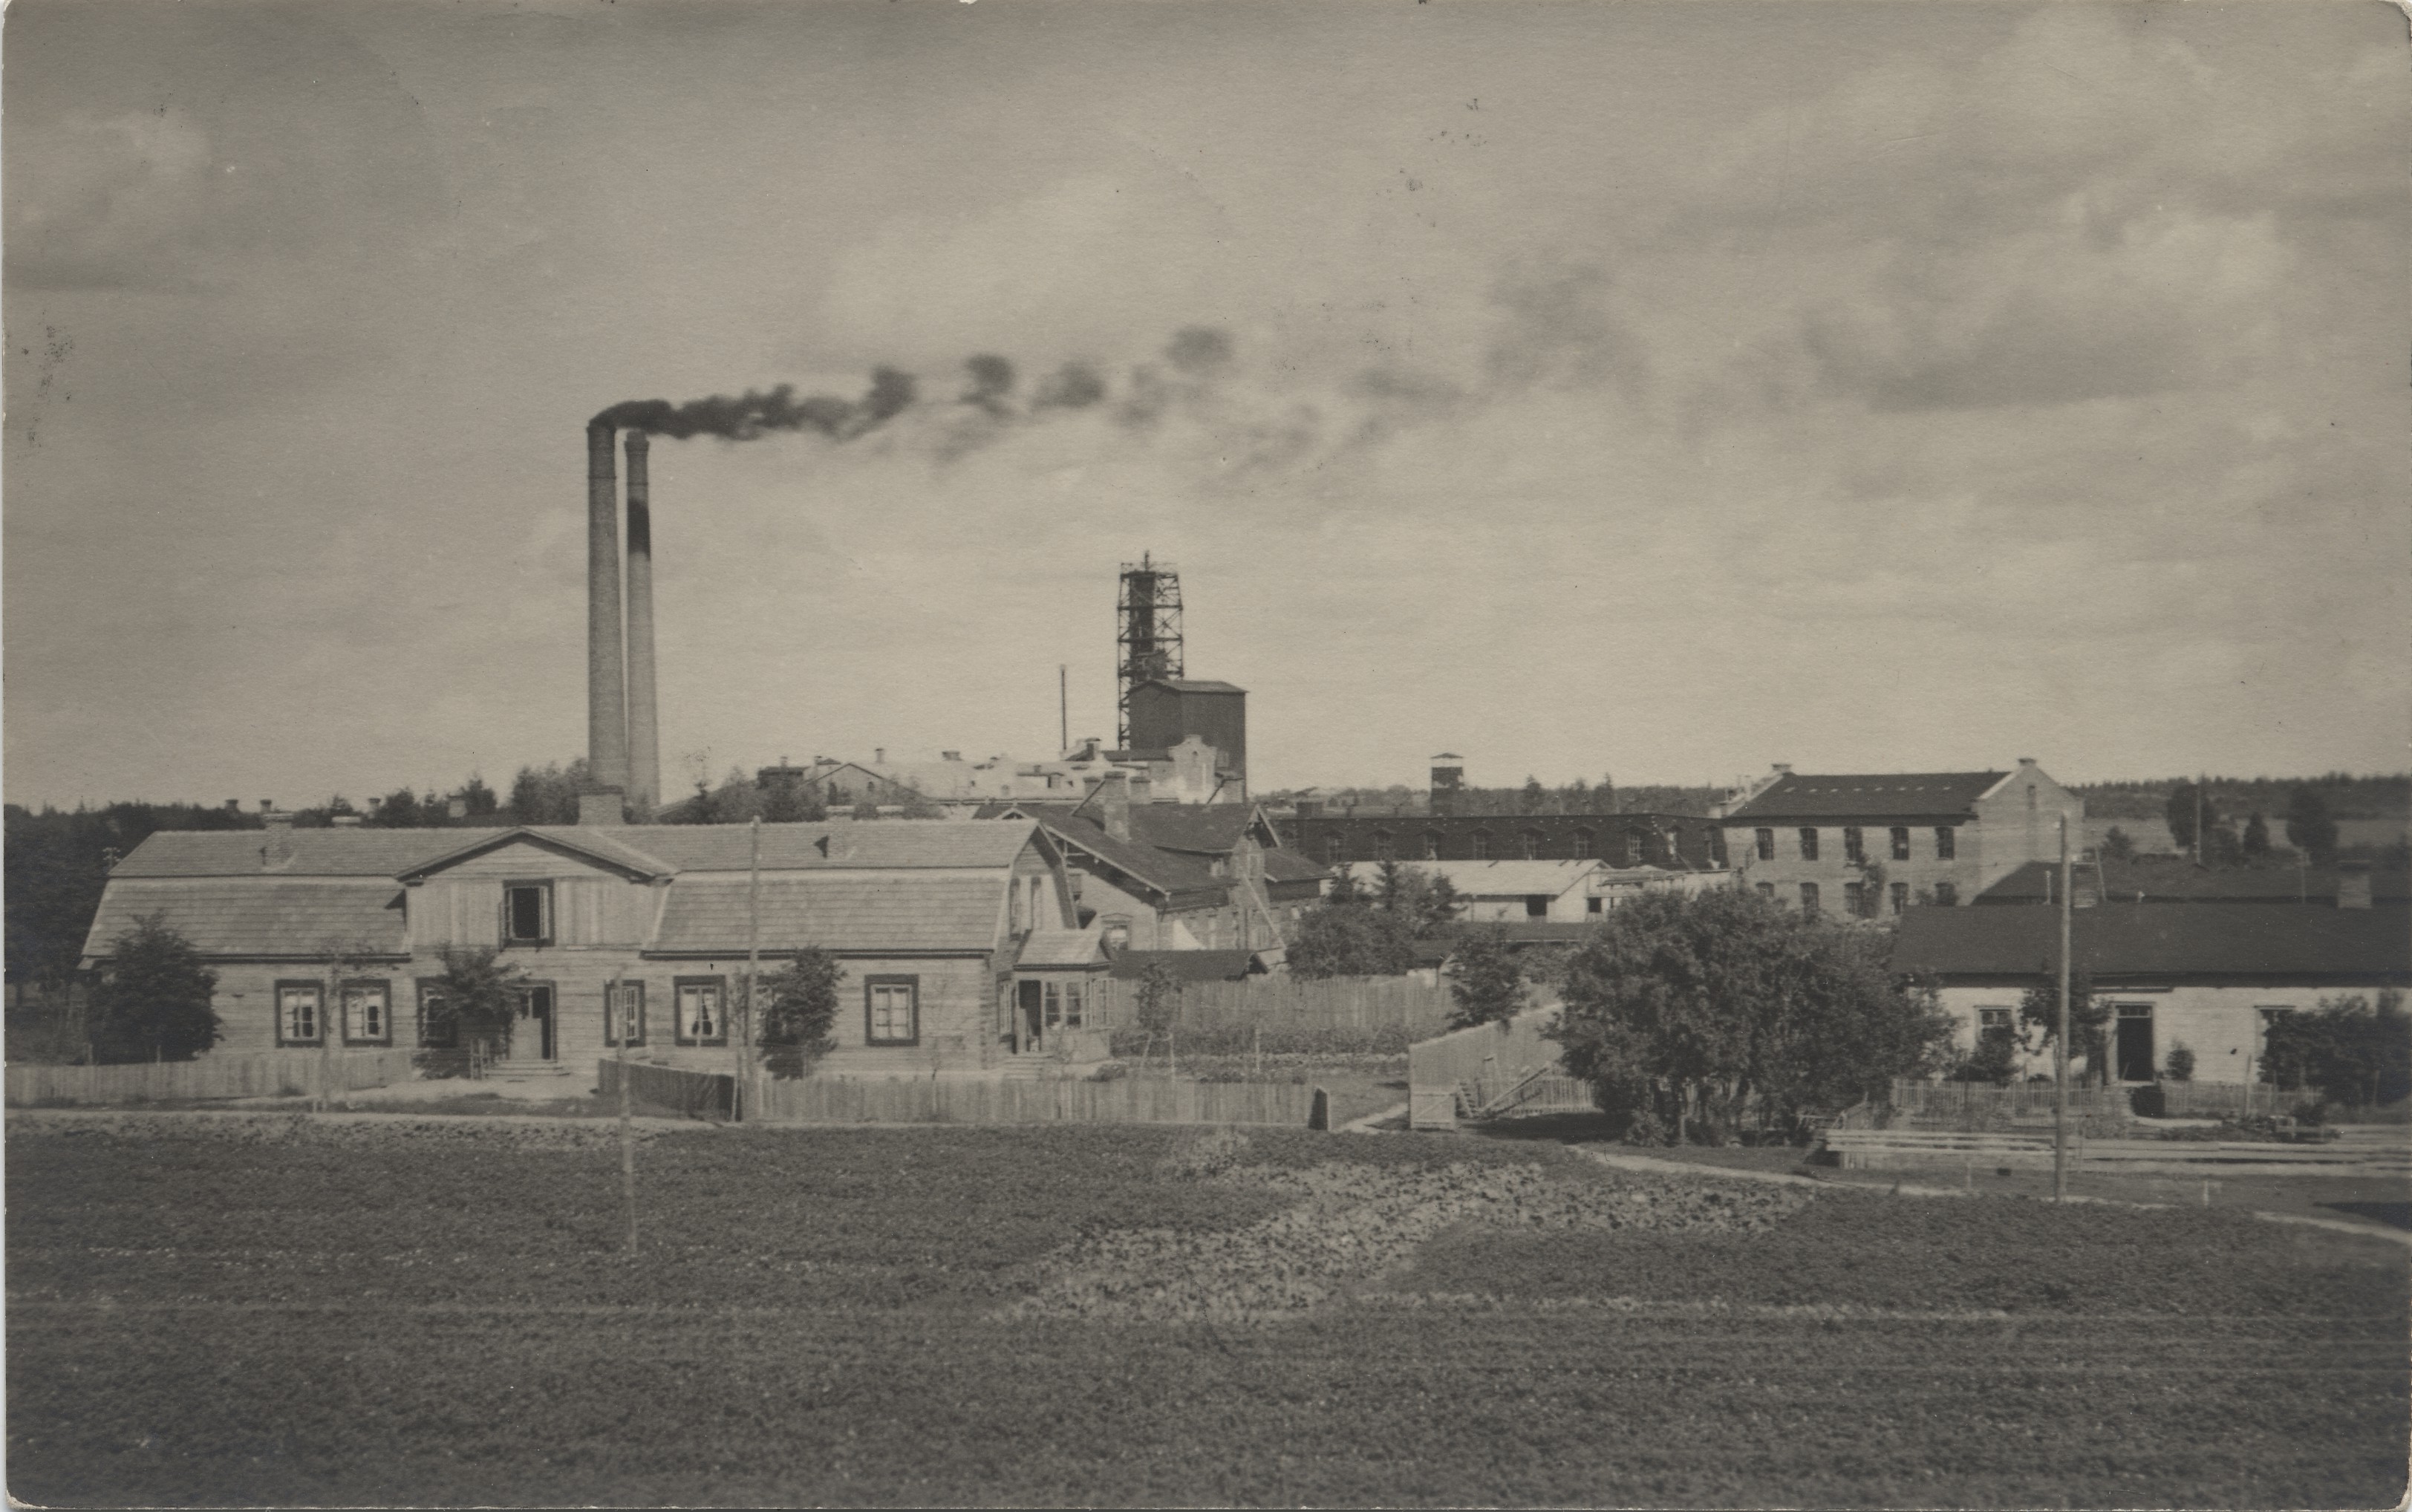 Türi paper factory